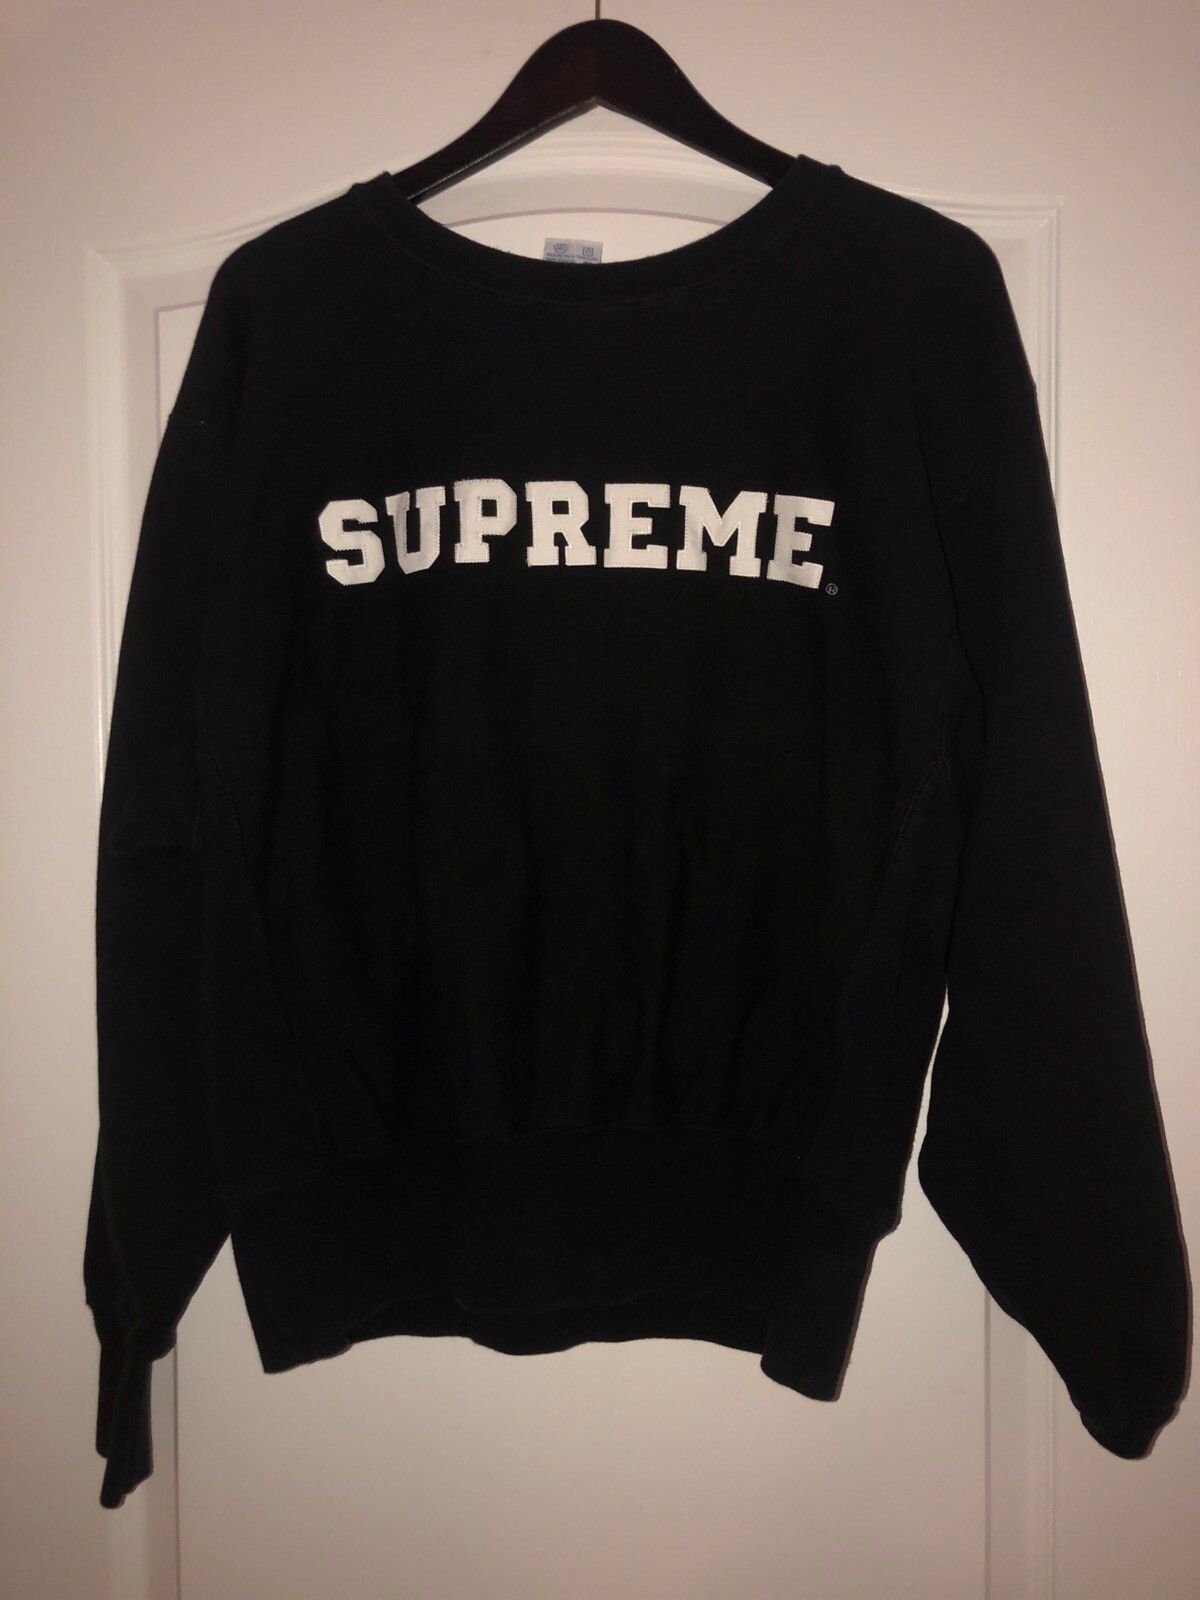 Supreme Vintage 90s Supreme X Champion Reverse Weave Sweatshirt Size US M / EU 48-50 / 2 - 2 Preview